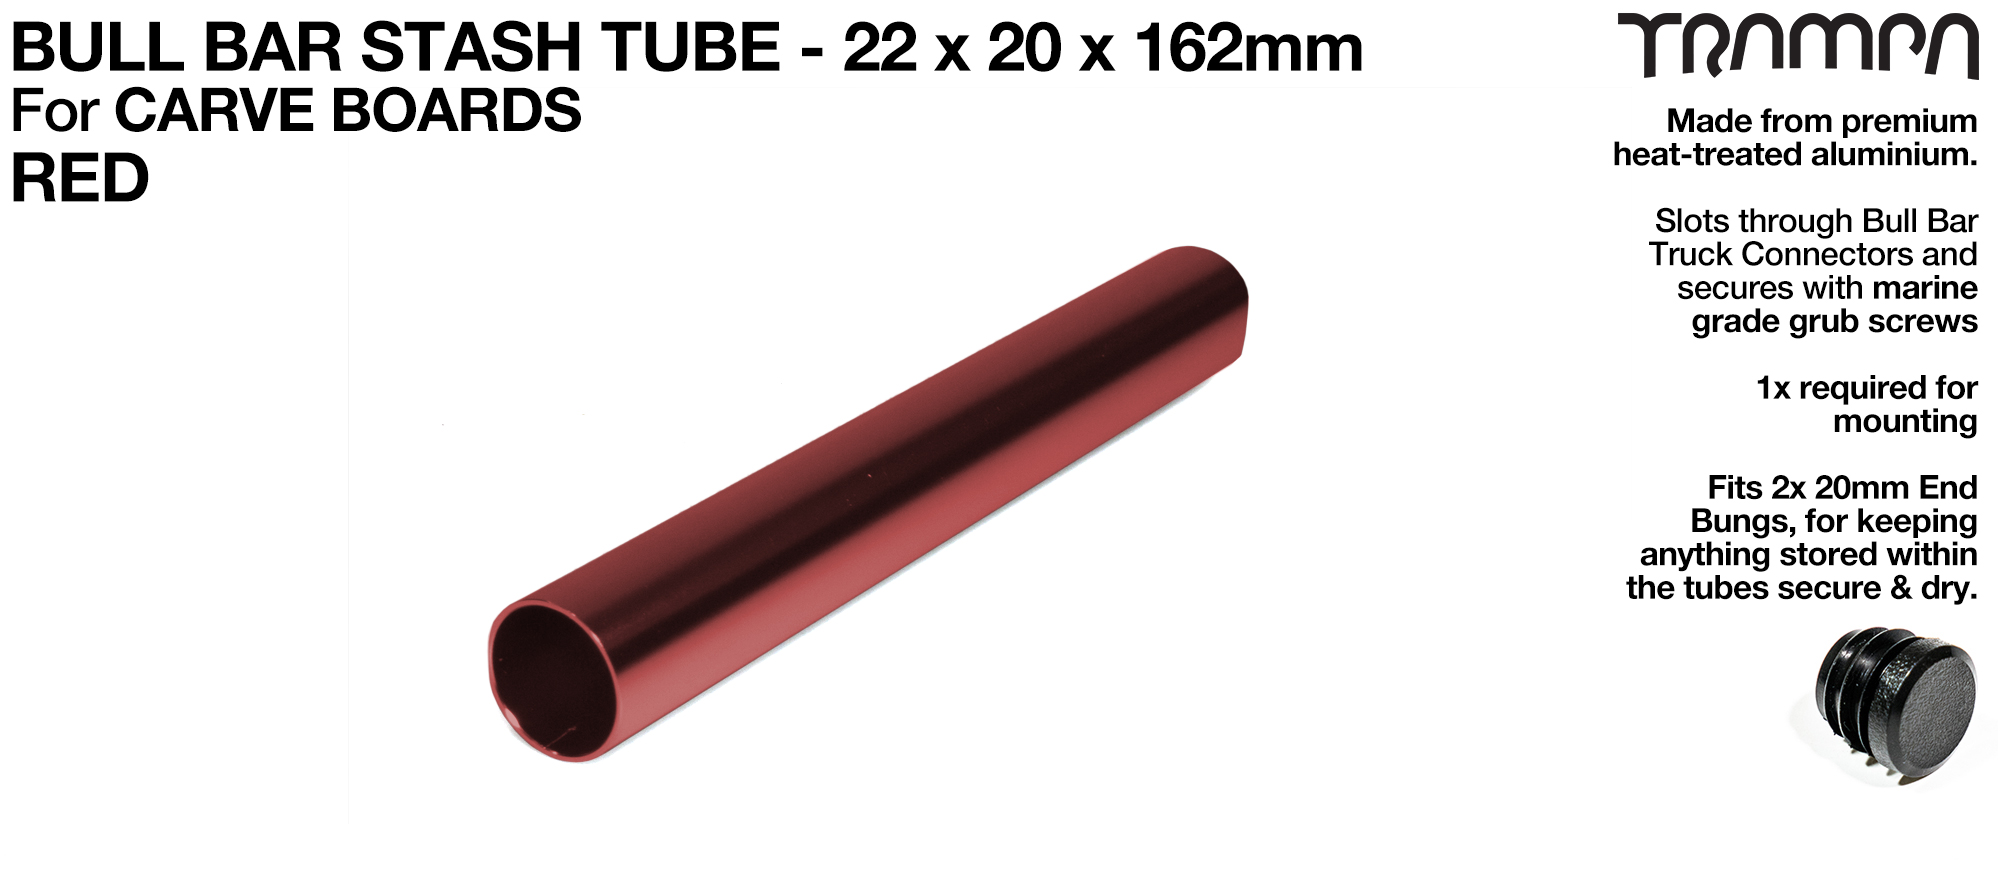 Carve Board Bull Bar Hollow Aluminium Stash Tube - RED 22 x 20 x 162 mm